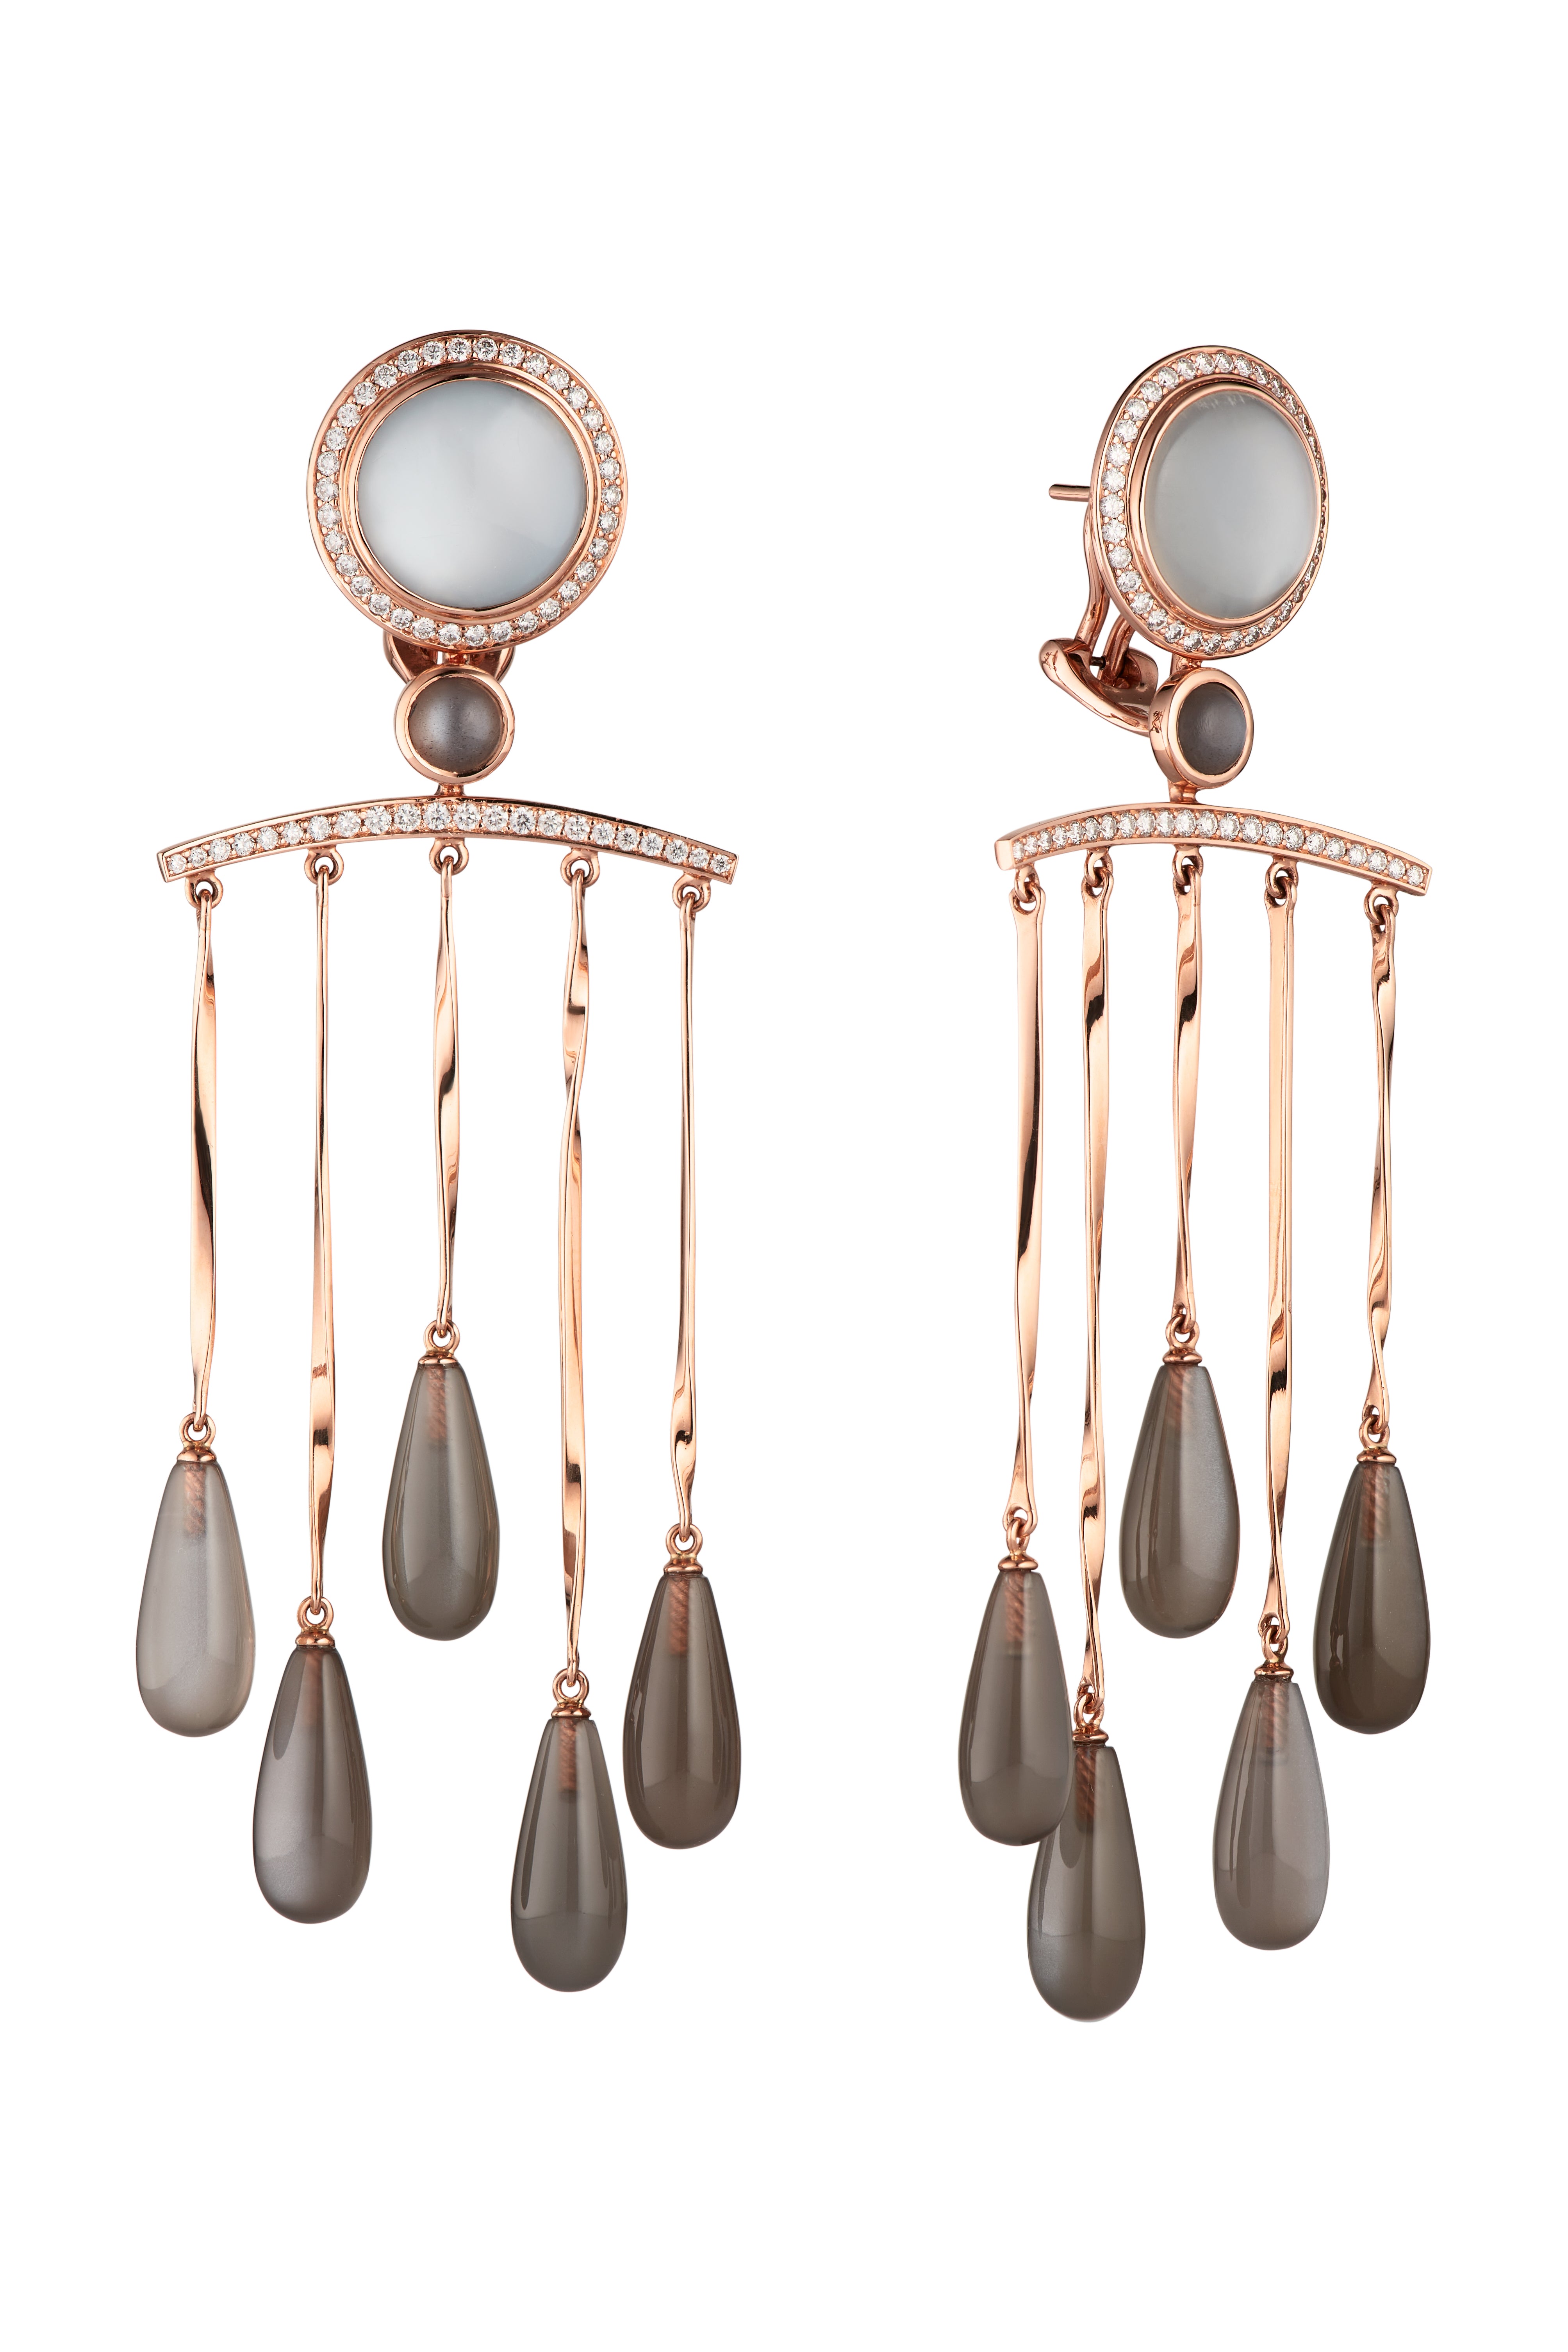 Pietra Di Luna - one-of-a-kind chandelier ørehængere